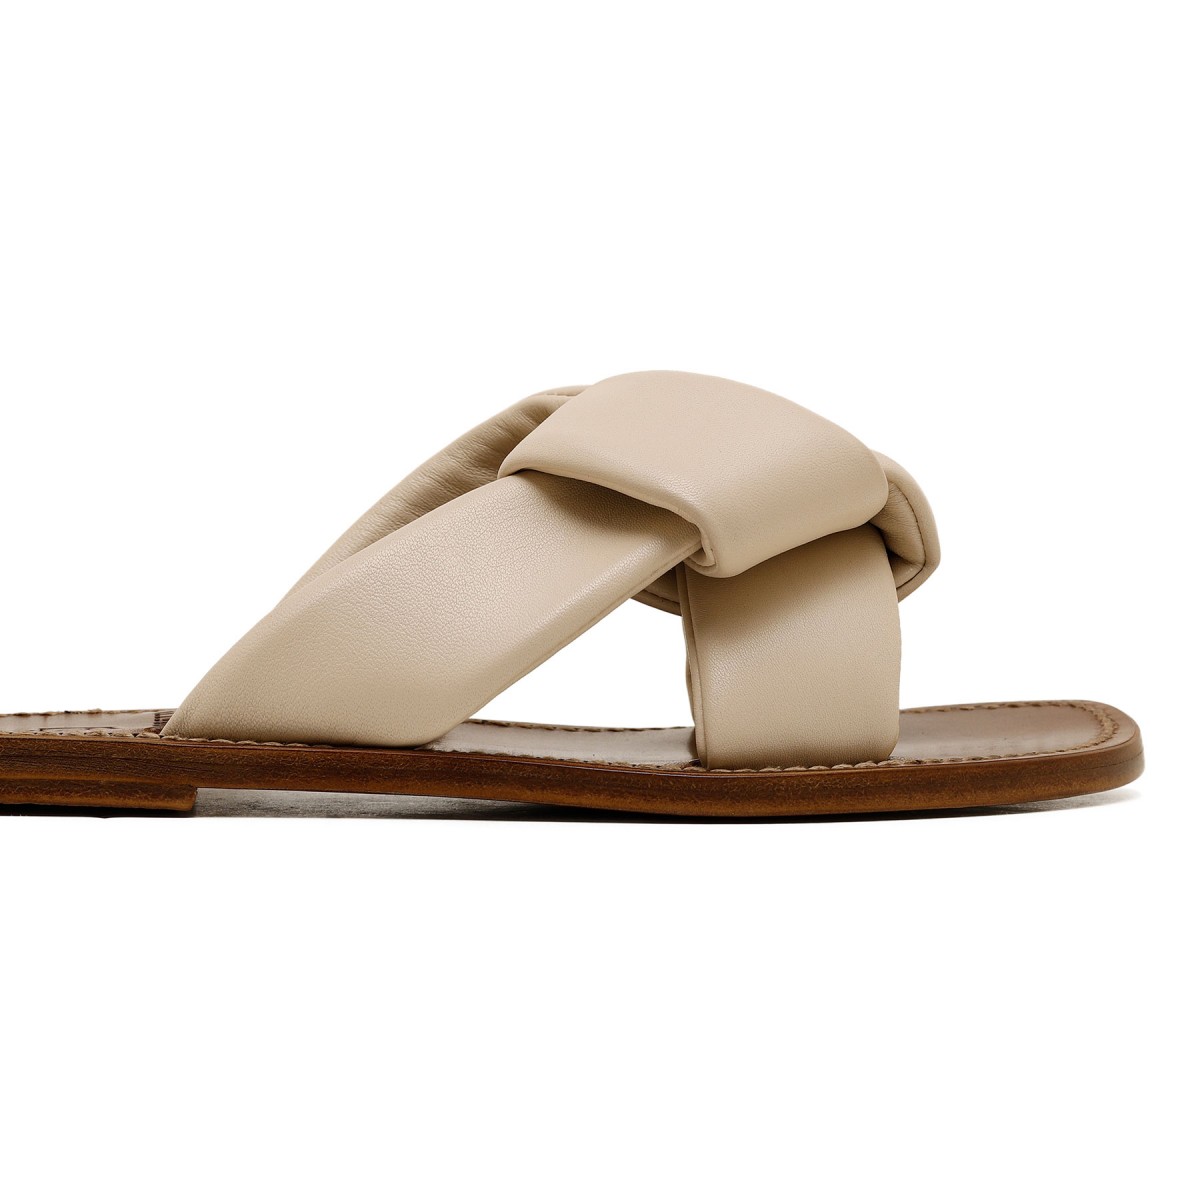 Cream leather slide sandals